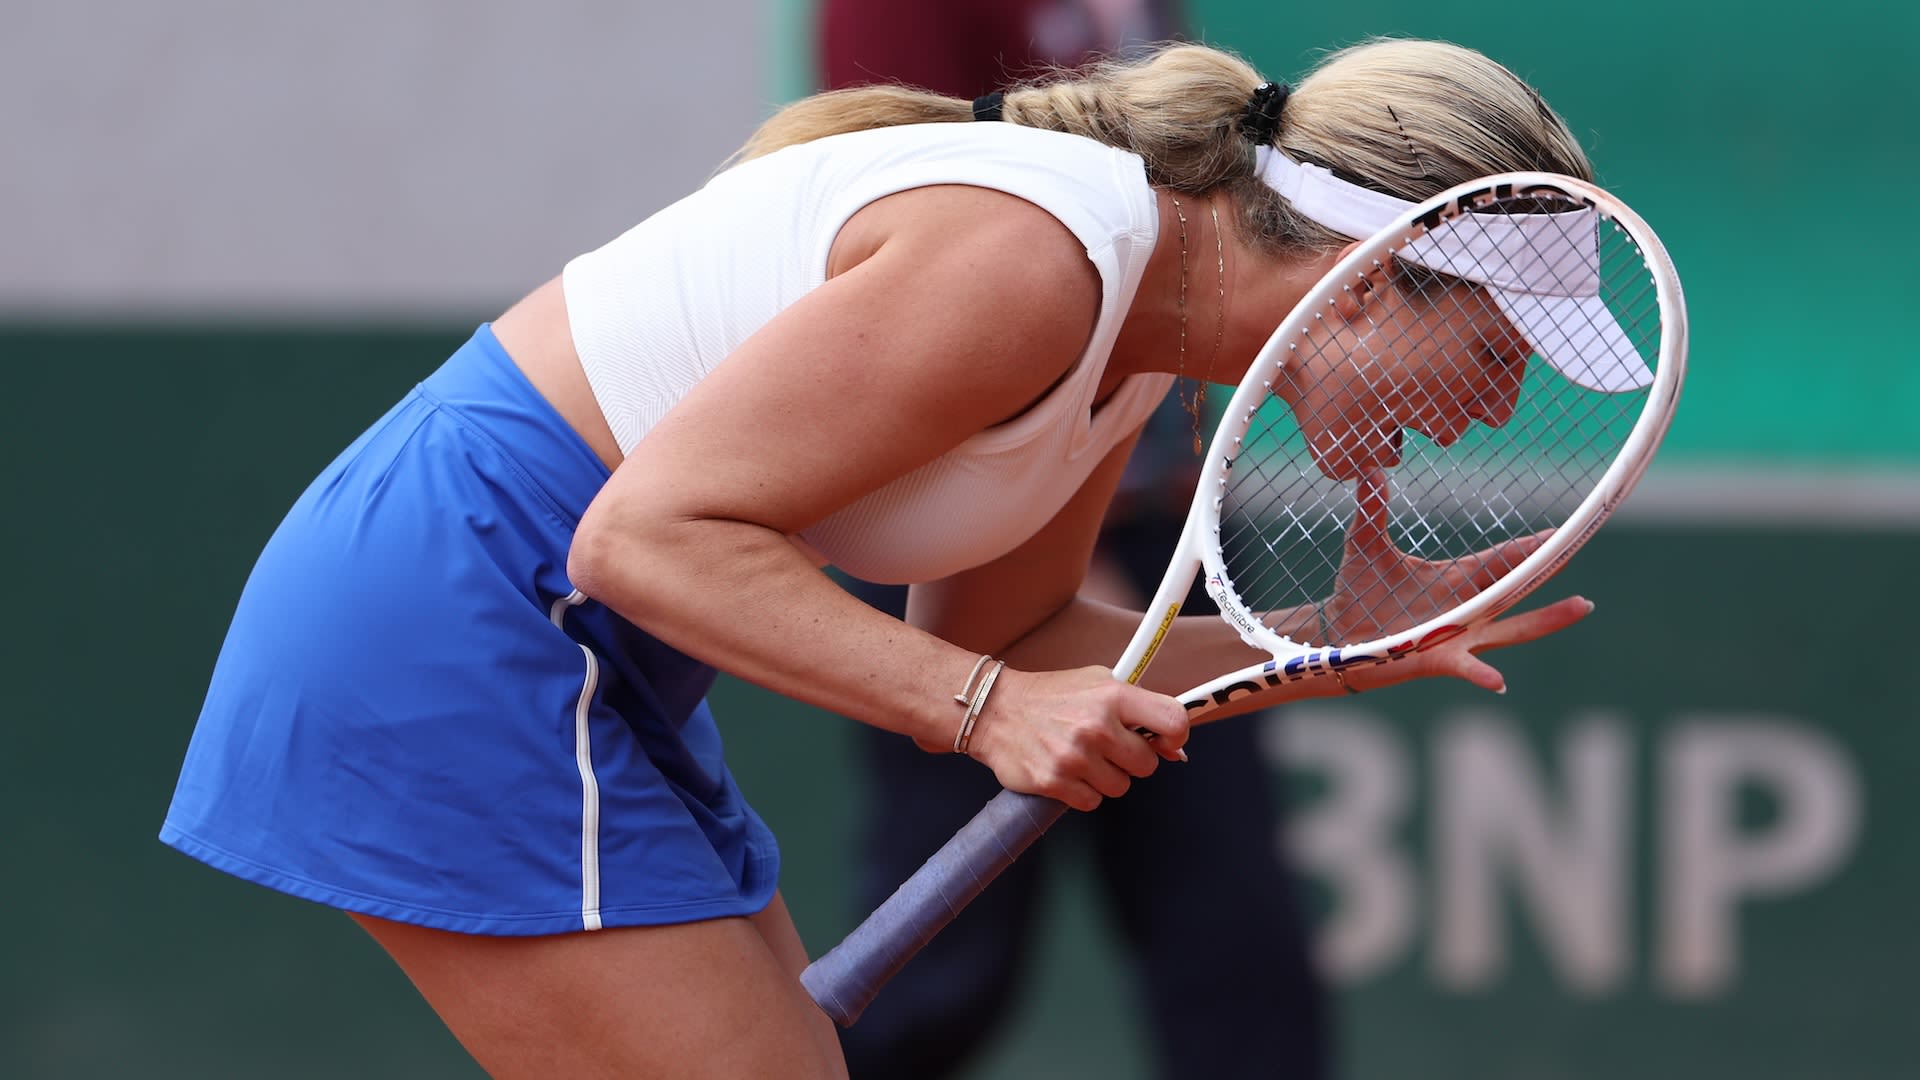 At final Roland Garros, Danielle Collins suffers shock exit to Olga Danilovic | Tennis.com